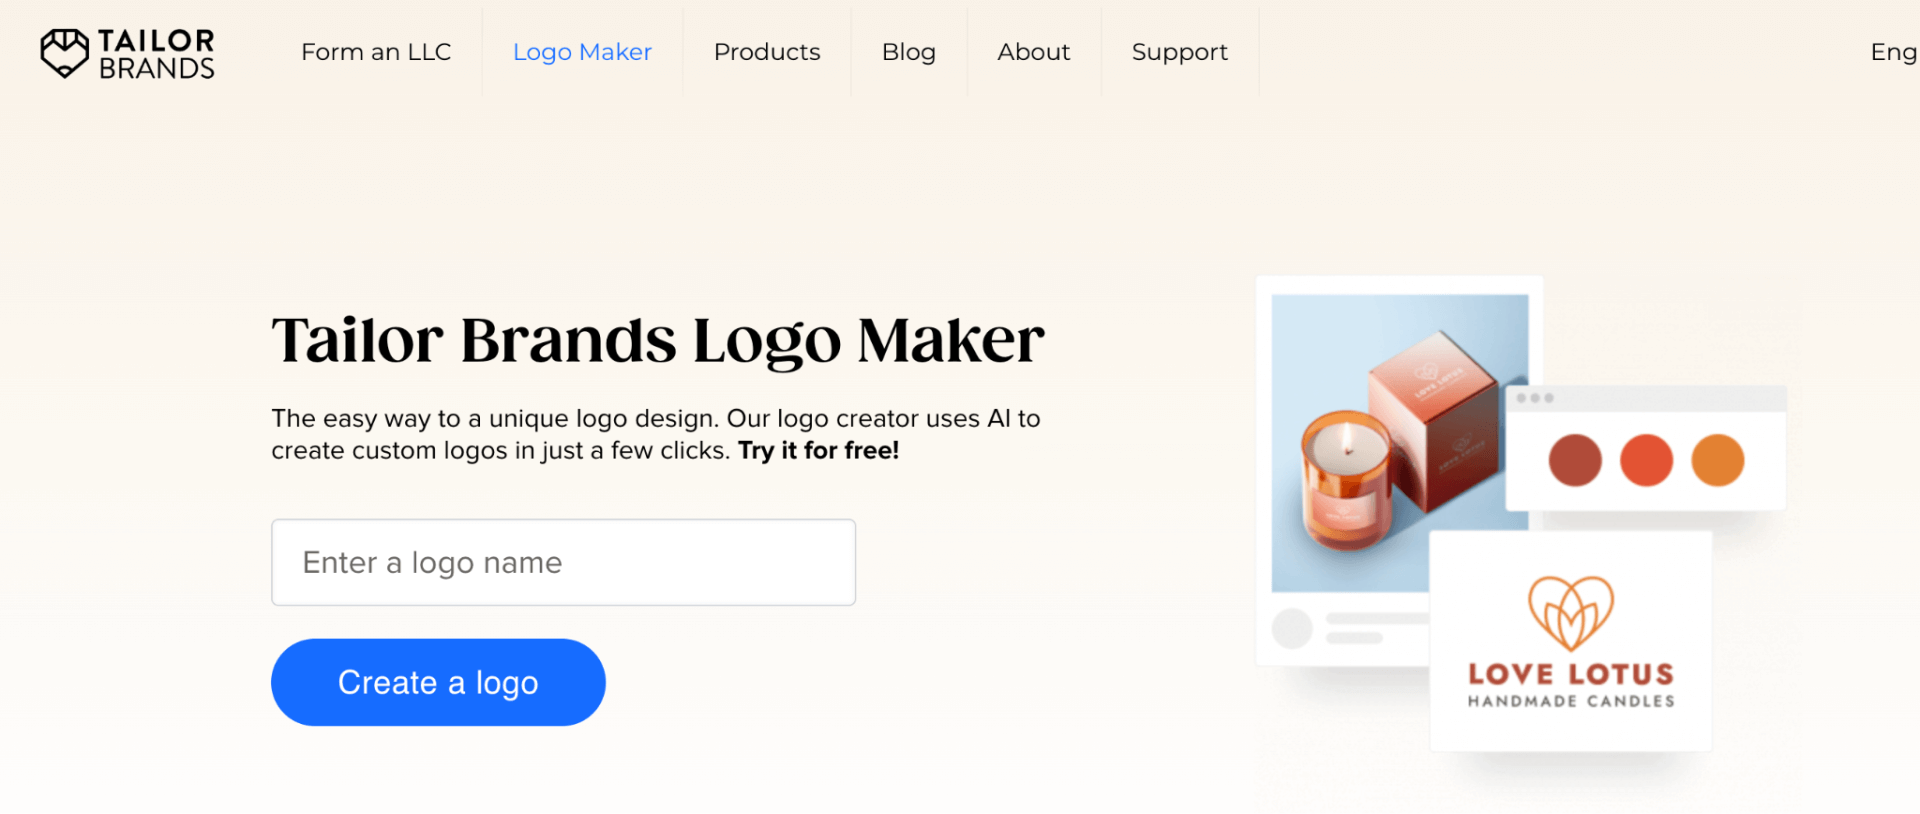 Free Personal Shopper Logo Designs - DIY Personal Shopper Logo Maker 